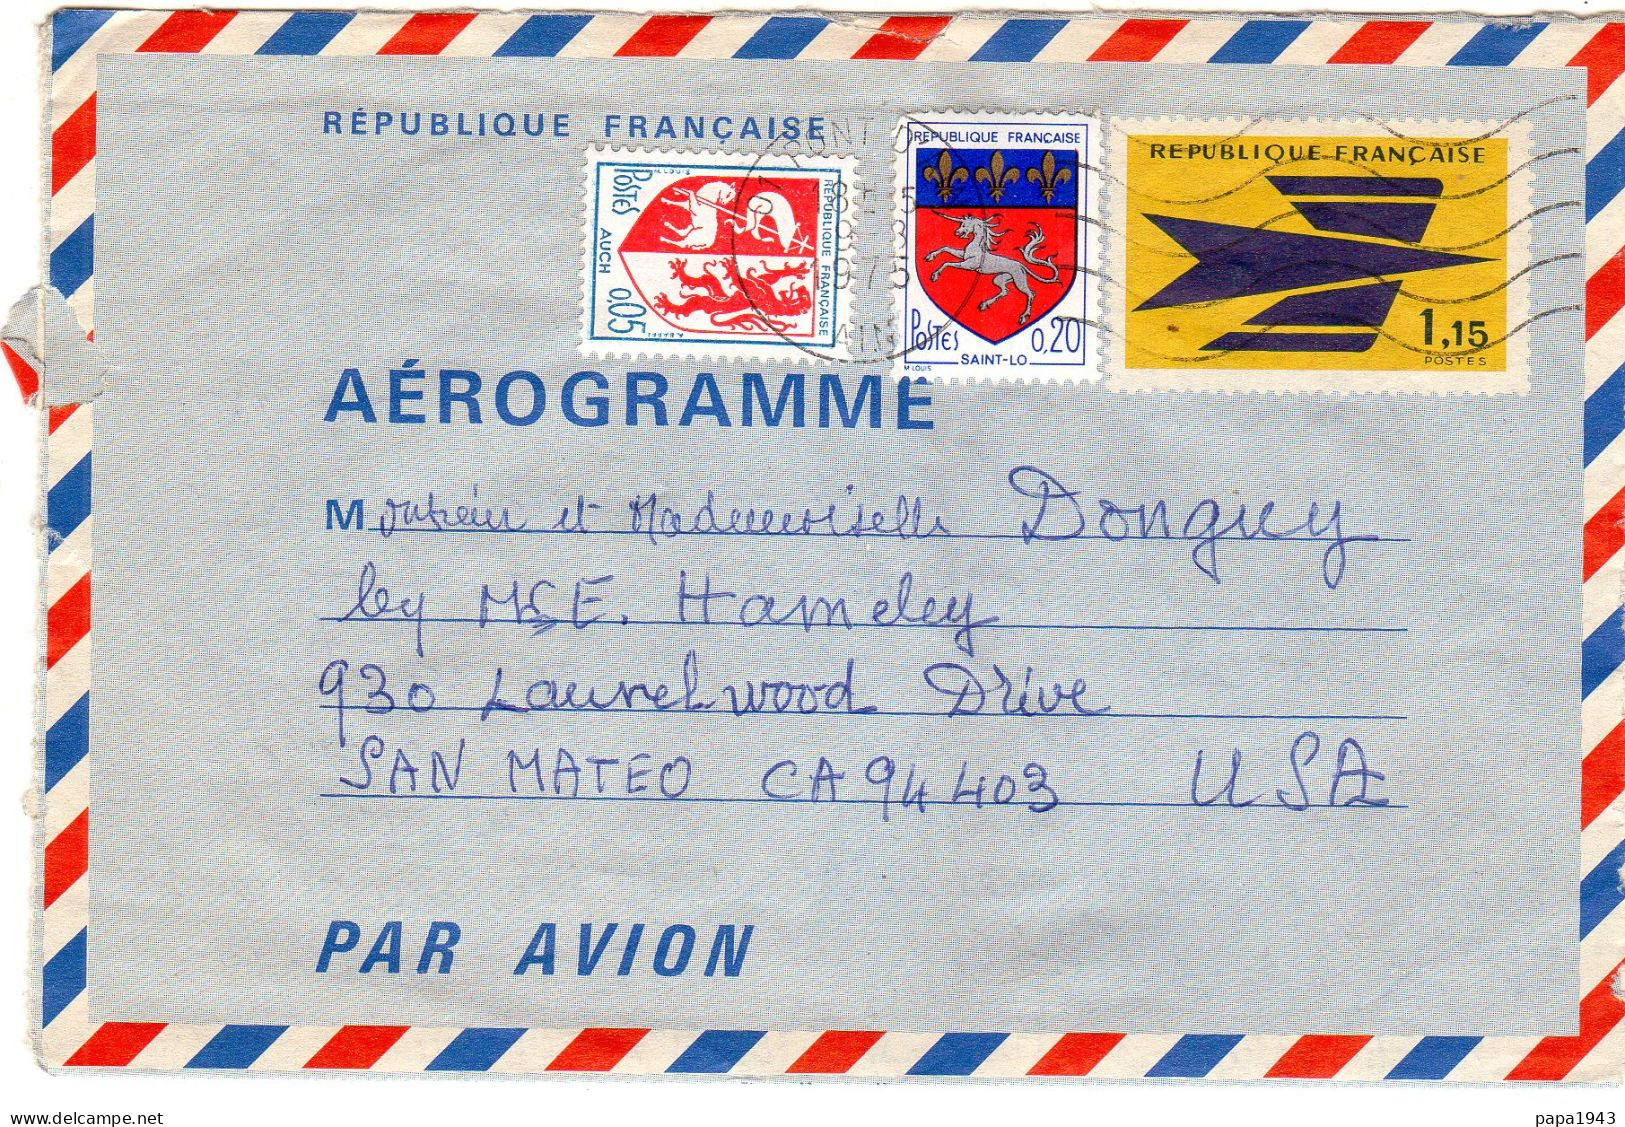 1975  AEROGRAMME  Timbres  Blasons Auch 0,05 + St LO 0,20 + 1,15 Envoyée à SAN MATEO U S A - Aérogrammes